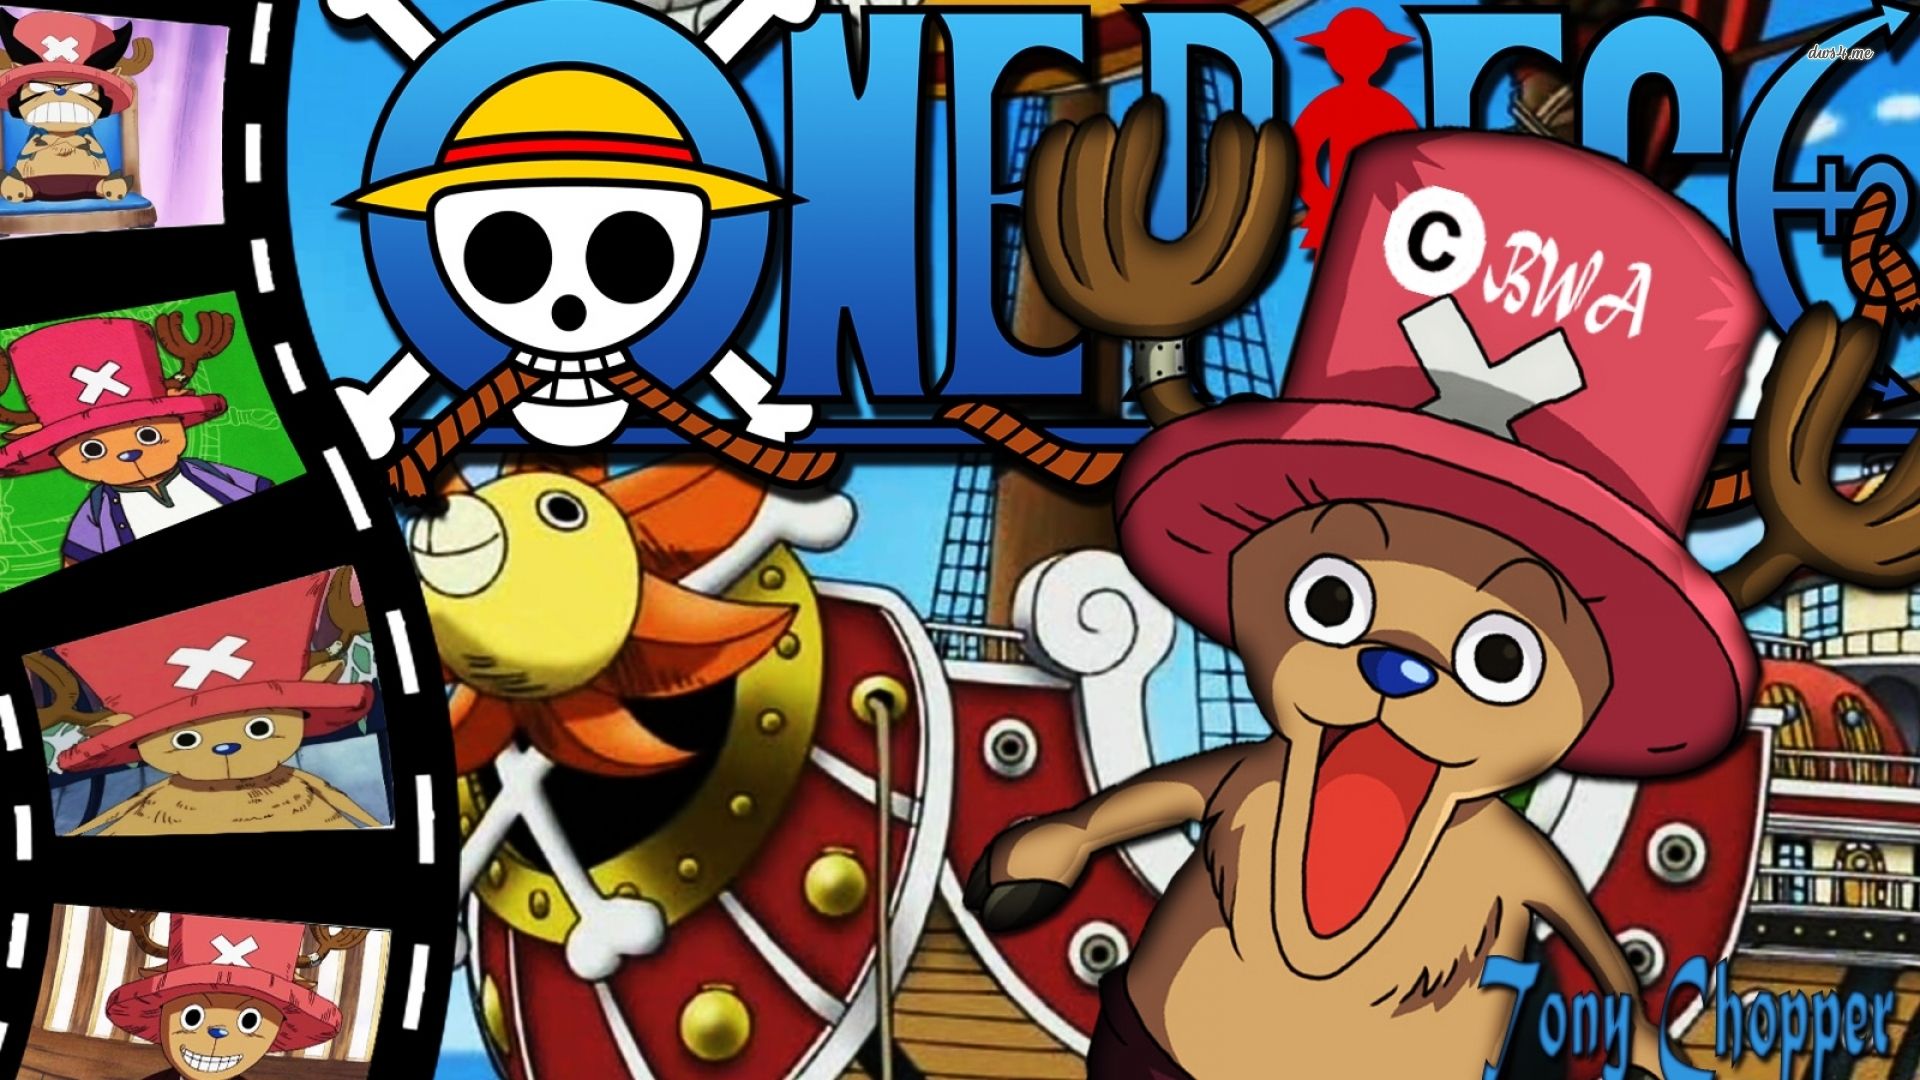 Tony Tony Chopper - One Piece wallpaper - Anime wallpapers -